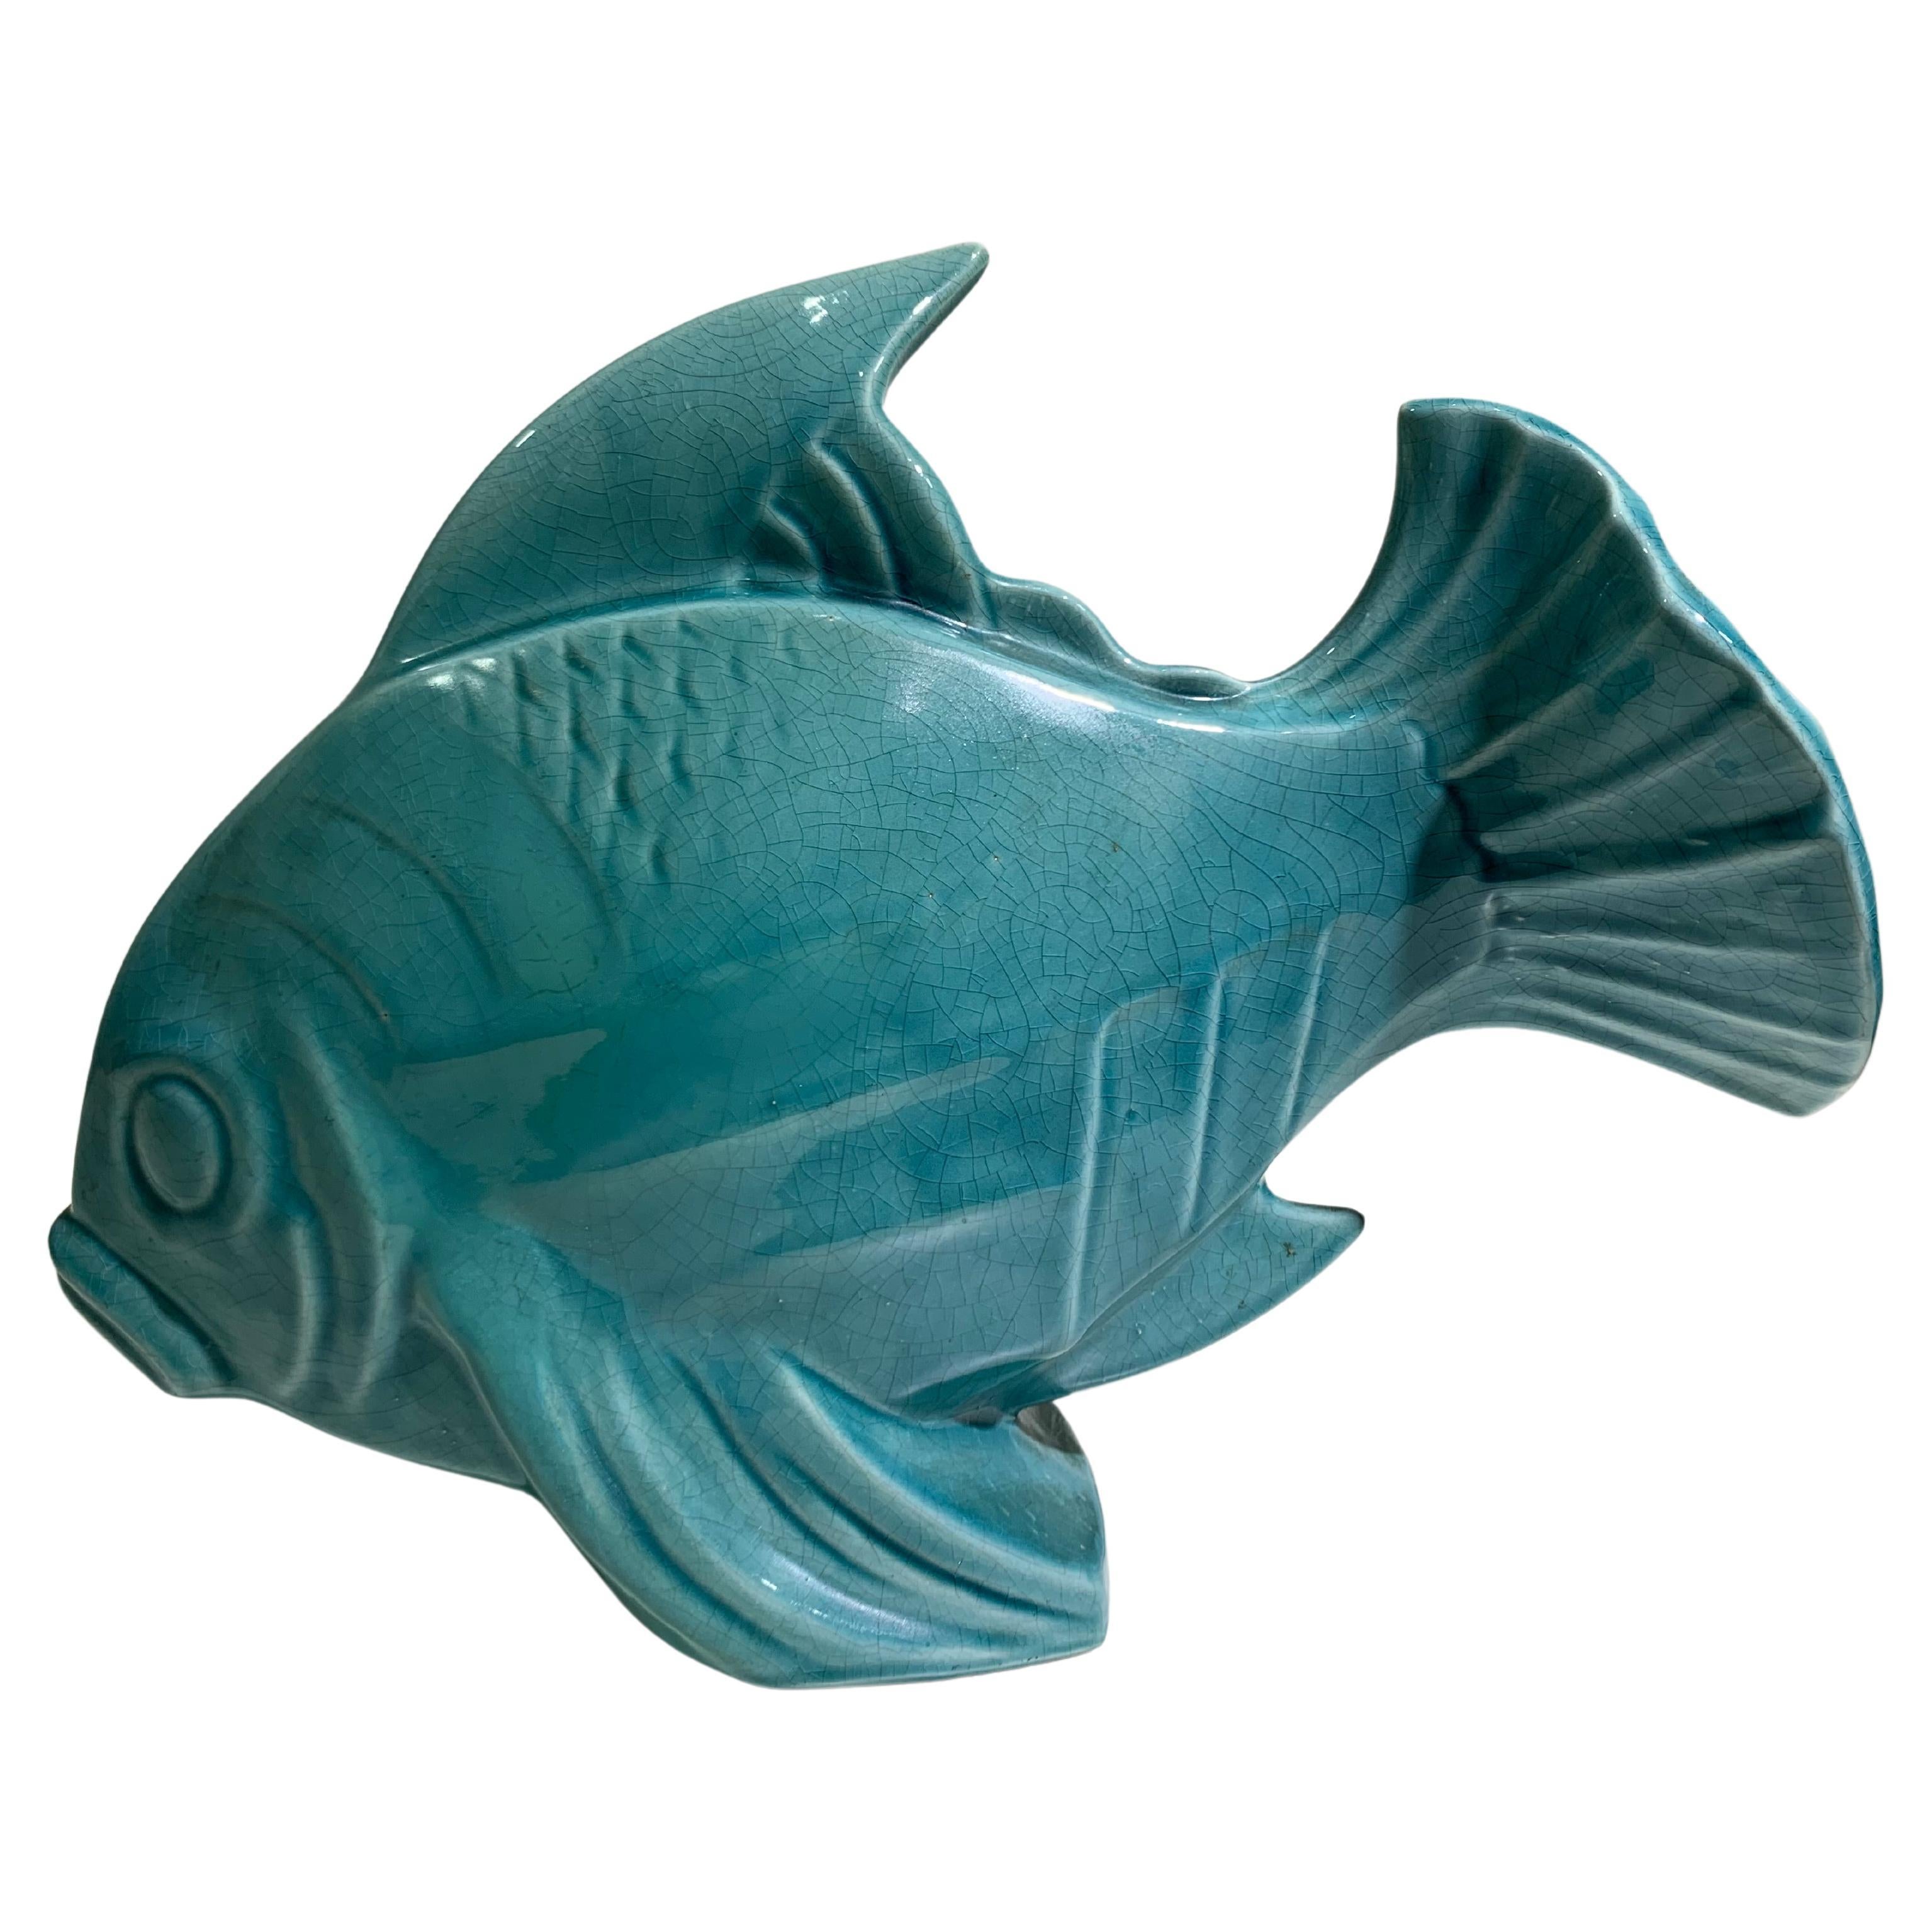 Art Deco Ceramic Fish, French Signed "Lejan" For Sale